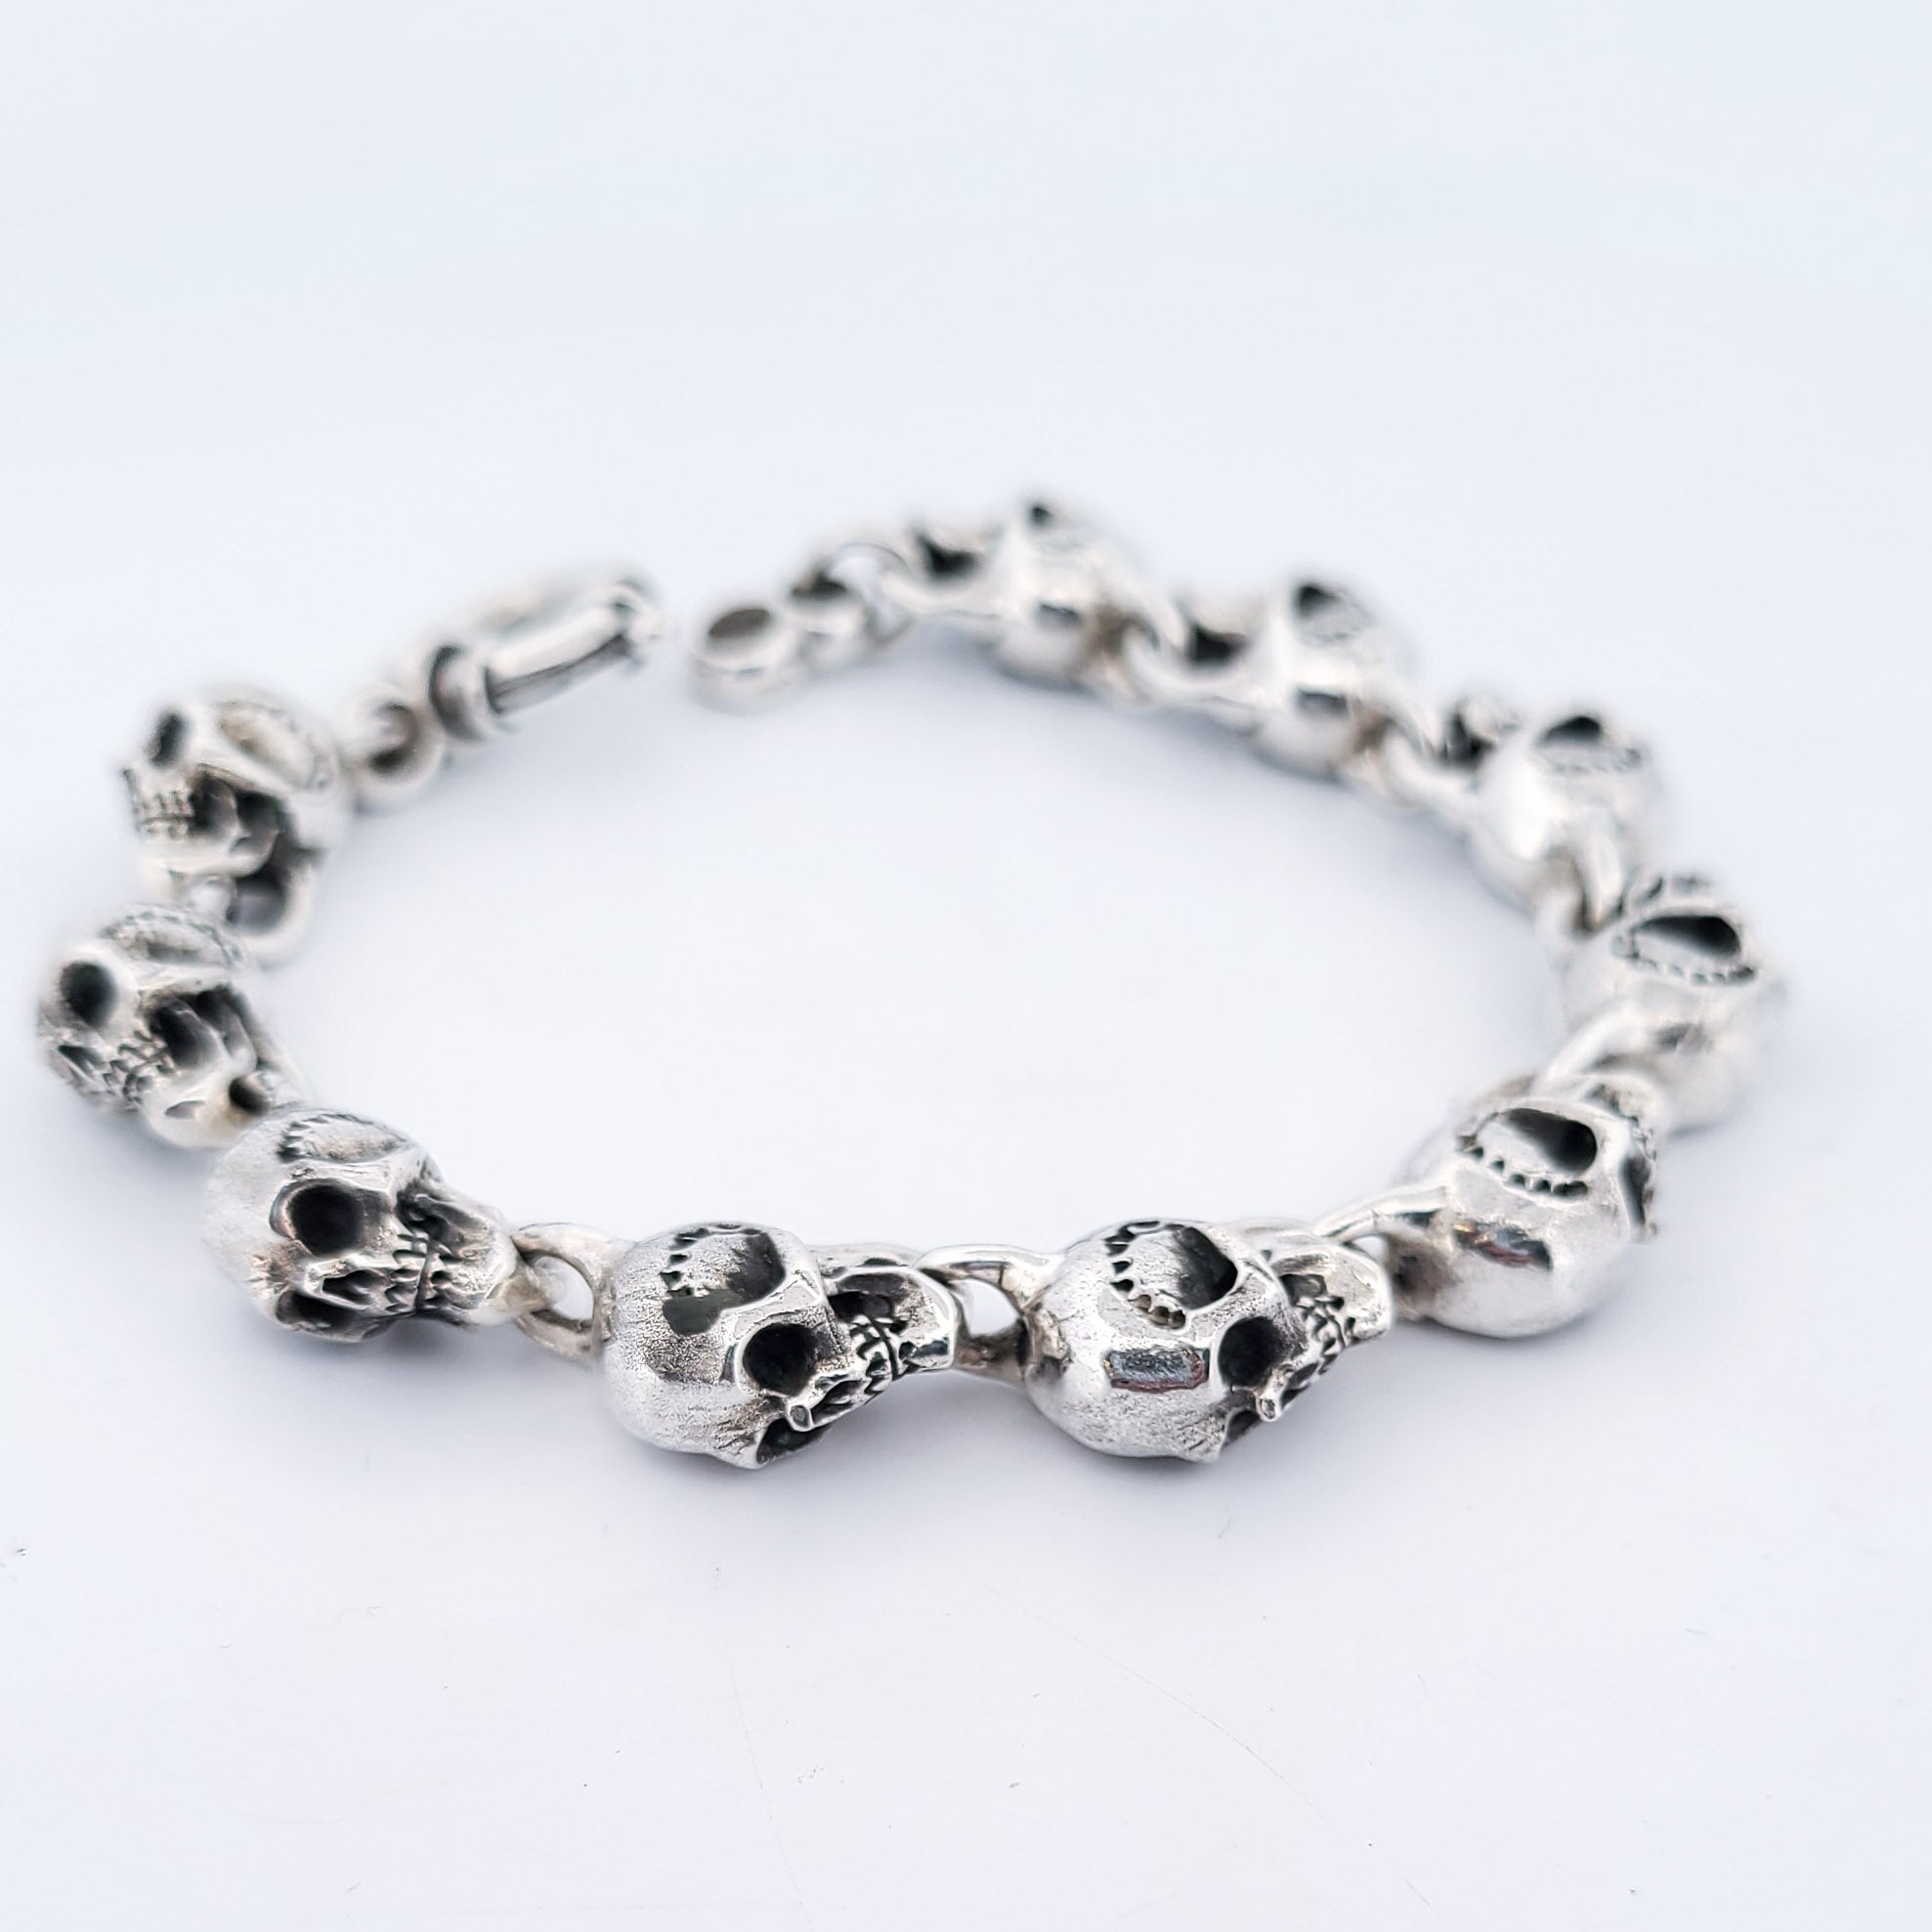 Skull Bracelet Sterling Silver 925, Oxidized Silver, Songyan Jewelry - Etsy  UK | Skull bracelet, Sterling silver bracelets, Silver chain style